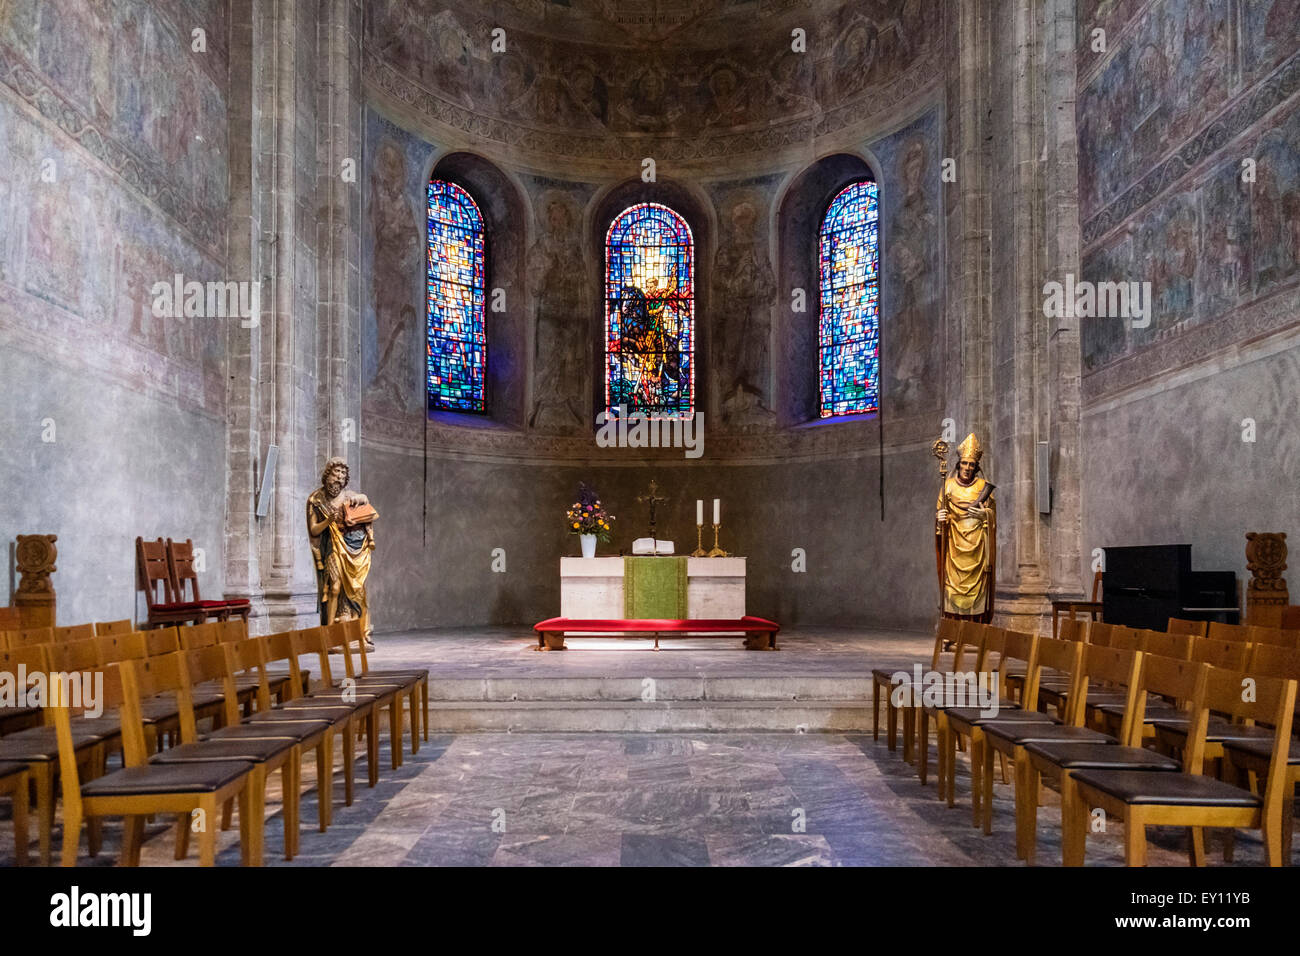 Braunschweig, Brunswick Braunschweiger Dom, St.Blasius Cattedrale interno, navata principale, le finestre di vetro macchiate, altare - Germania Foto Stock